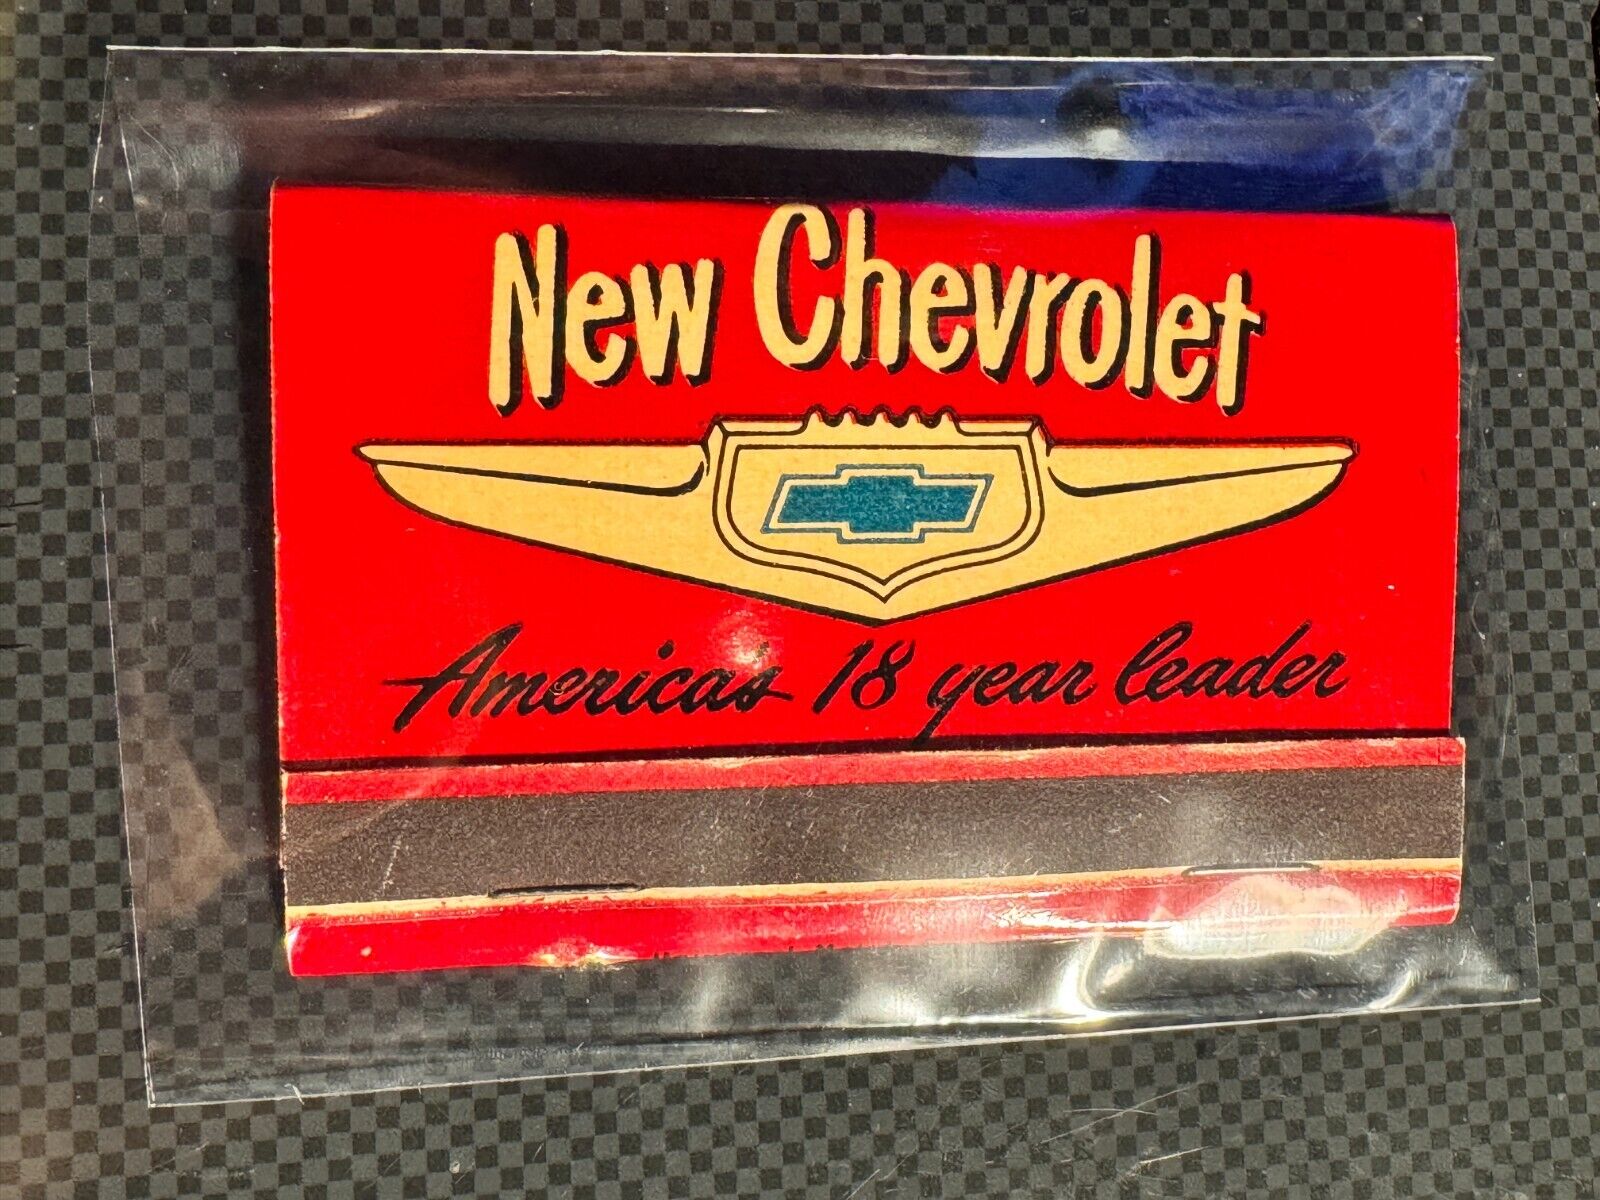 MATCHBOOK - NEW CHEVROLET - AMERICA'S 18 YEAR LEADER - GARNER MOTORS - UNSTRUCK